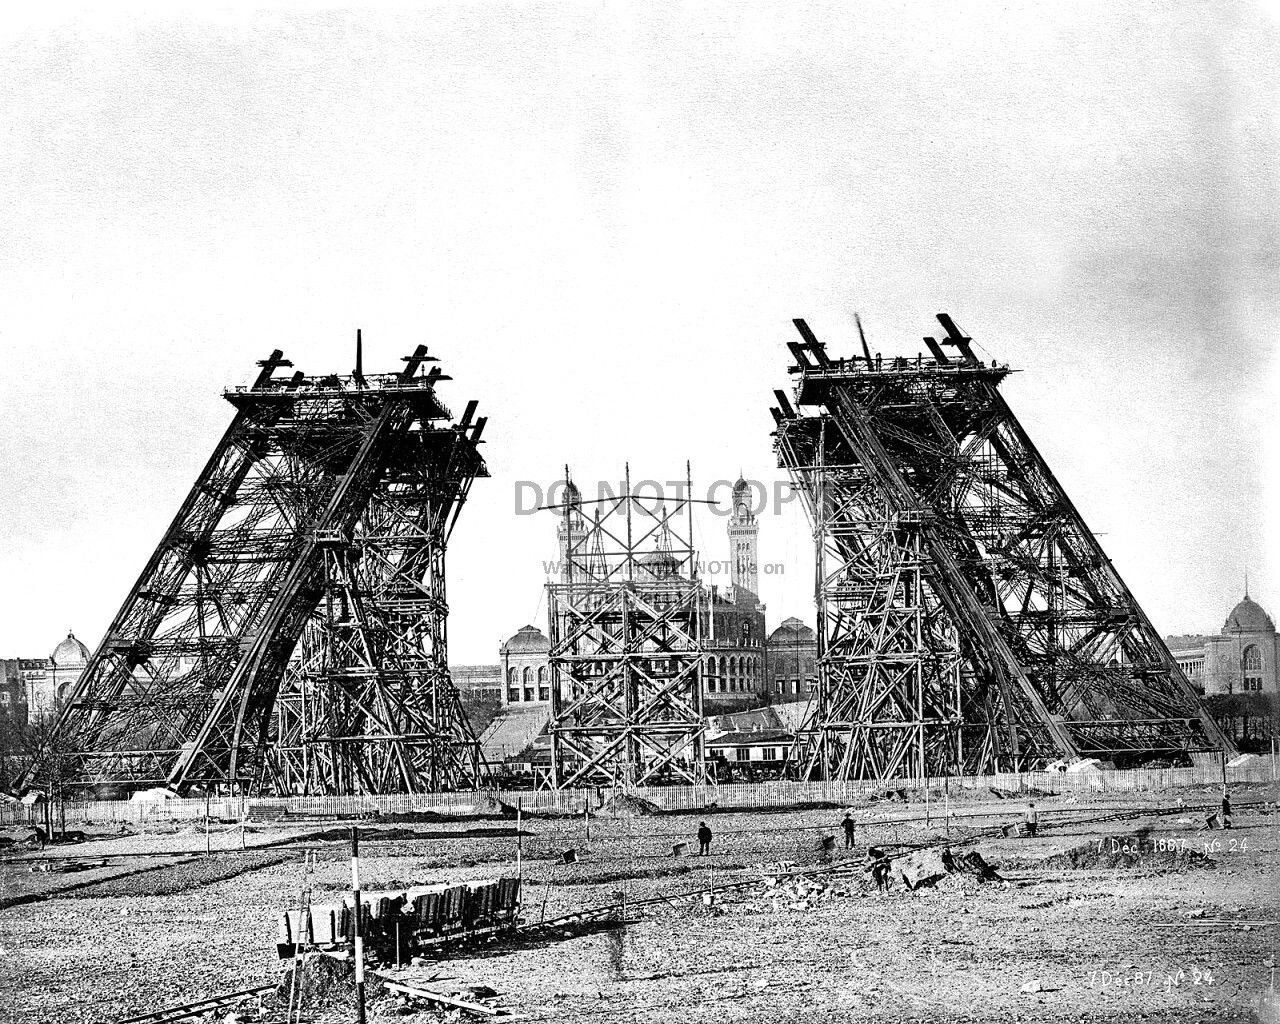 EIFFEL TOWER IN PARIS UNDER CONSTRUCTION, CIRCA 1889 - 8X10 PHOTO (CC648)